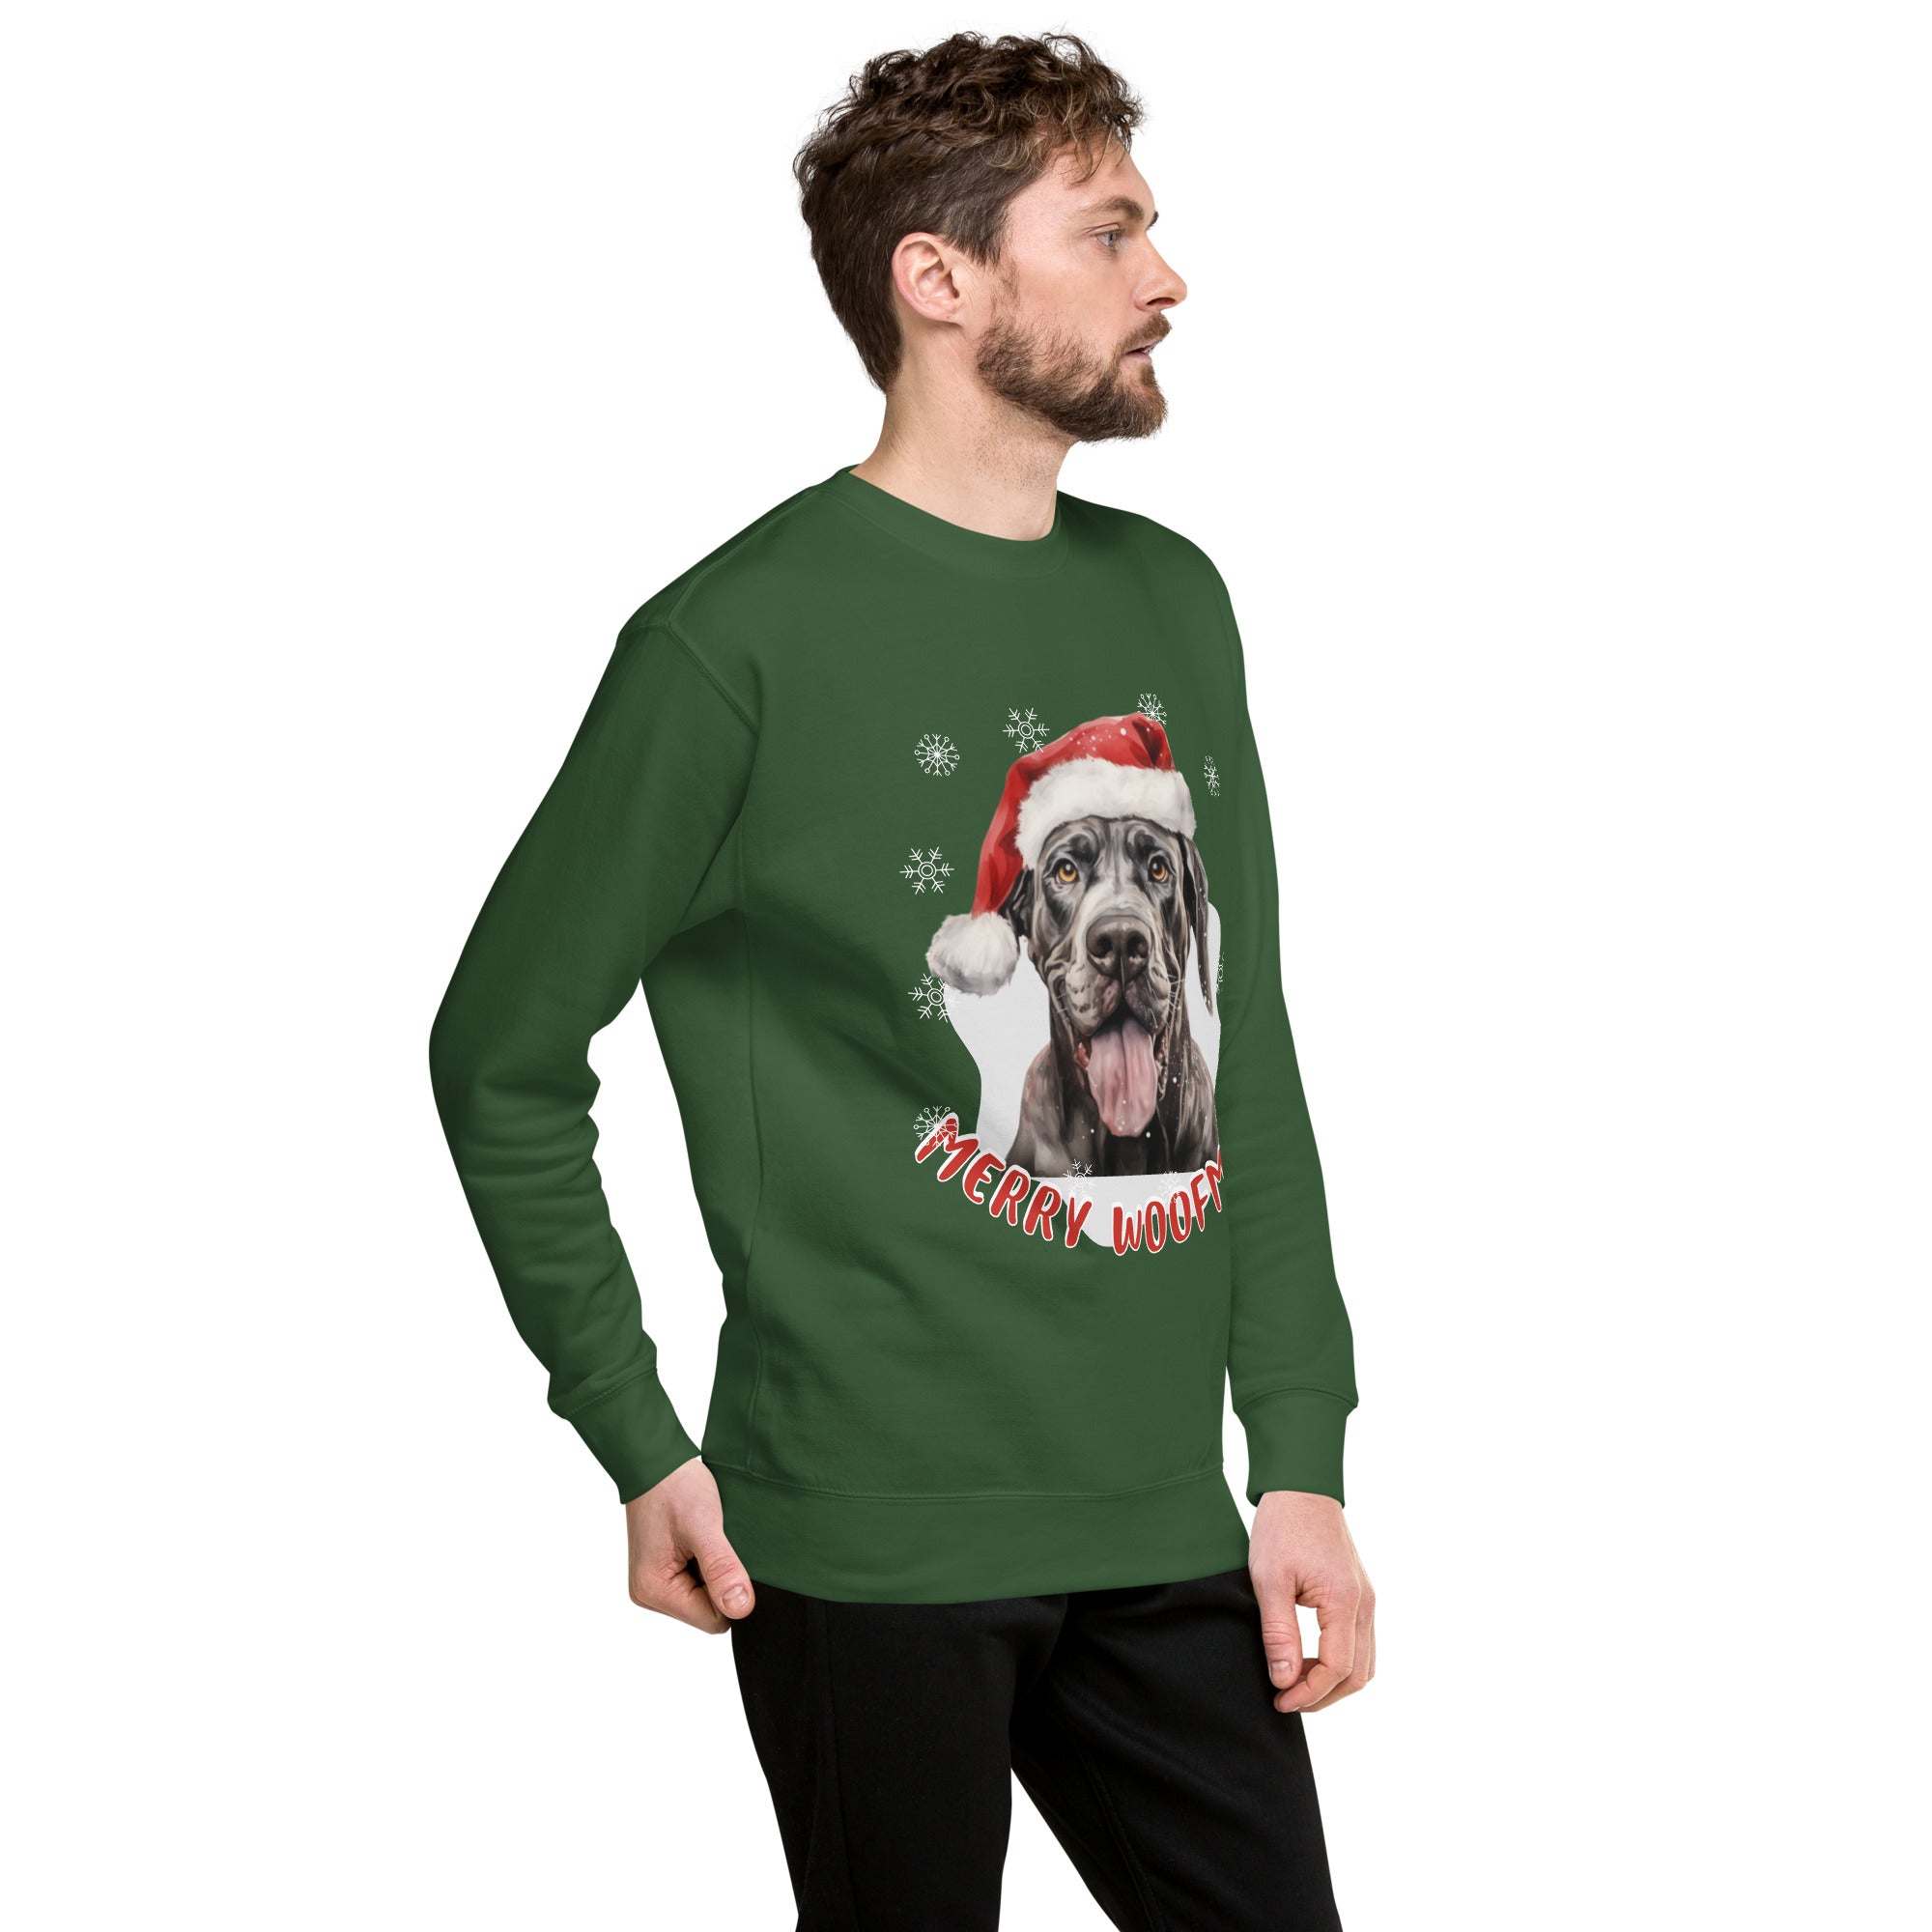 Unisex Premium Sweatshirt Great Dane - Merry Woofmas